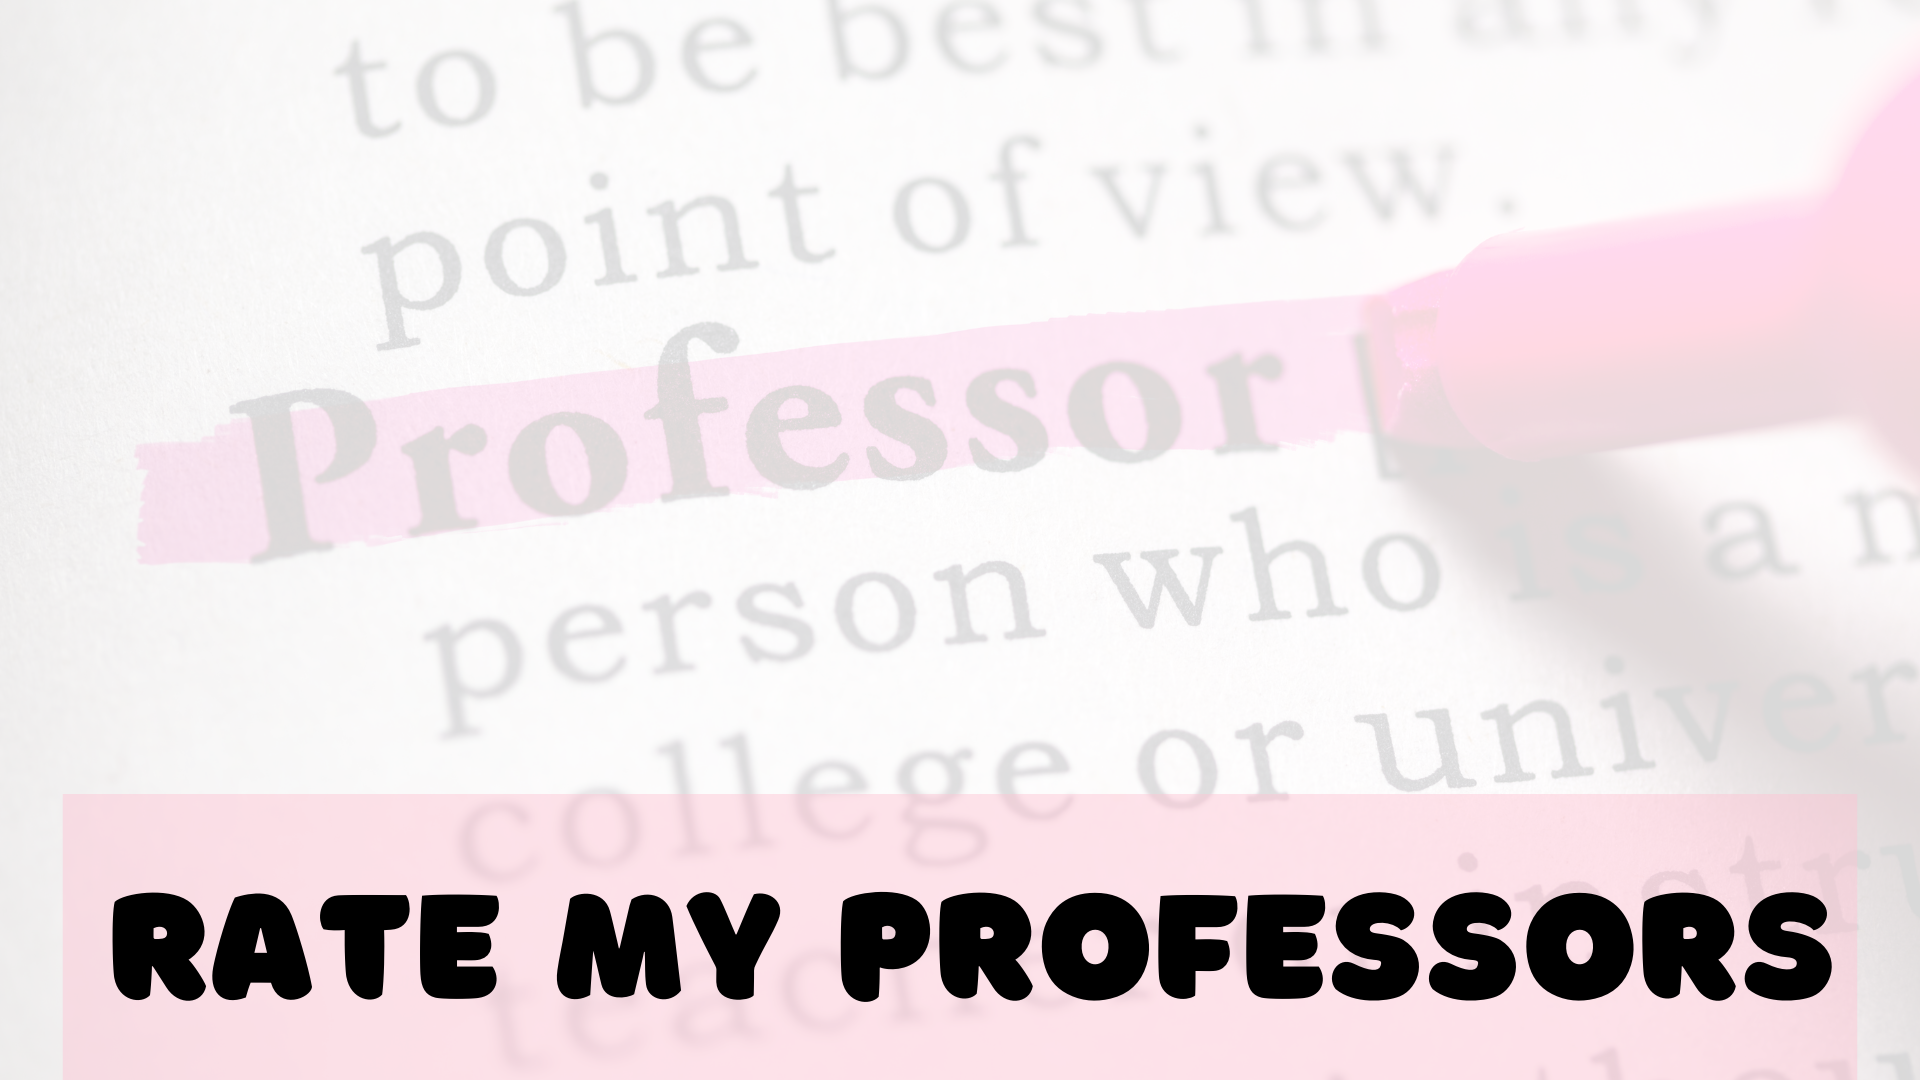 Rate My Professor